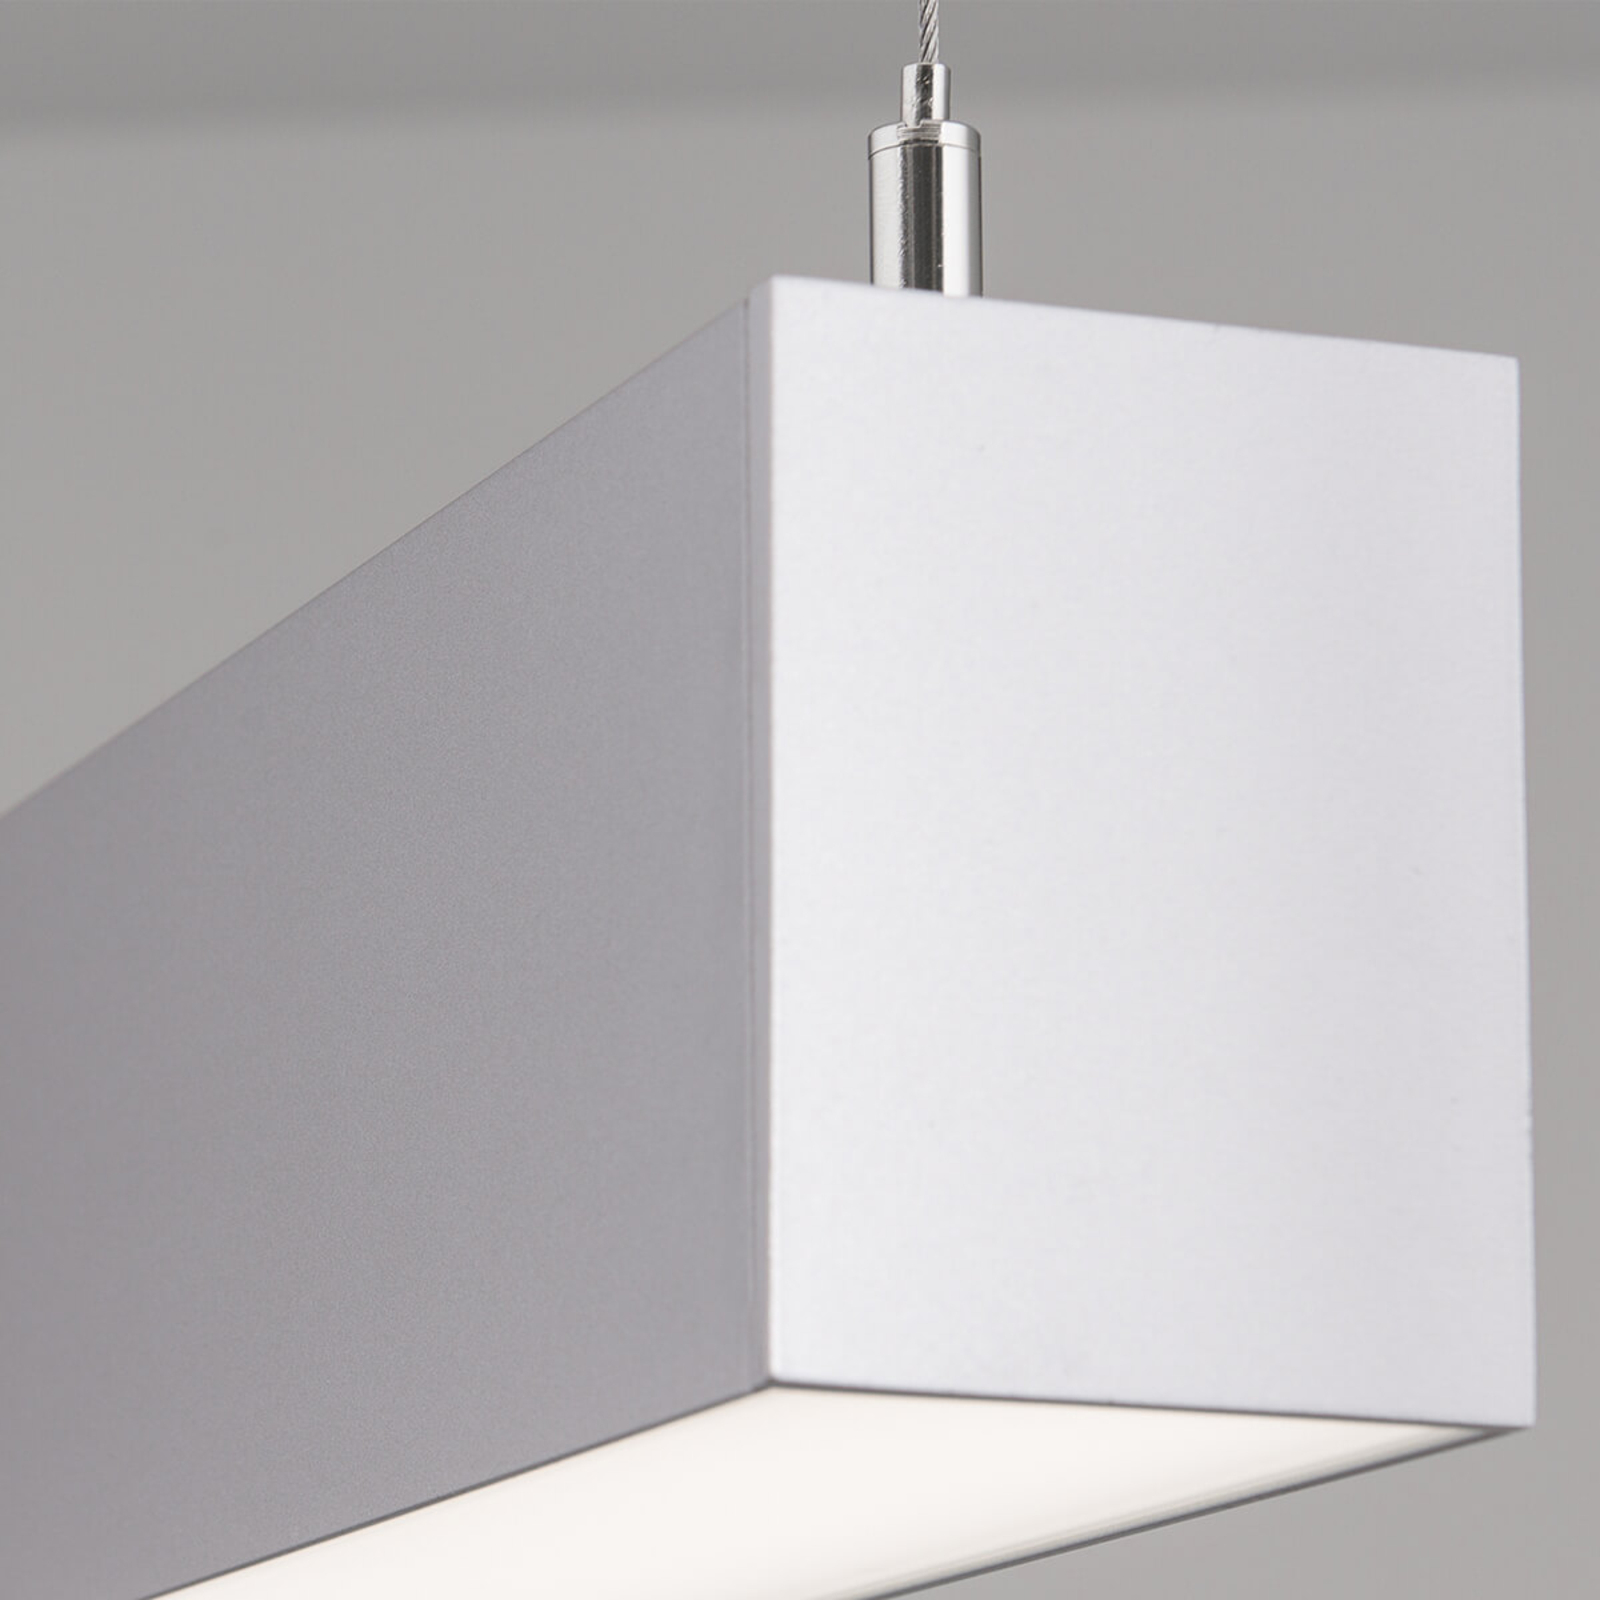 Lampa sufitowa LED Sando z zestawem, 114 cm